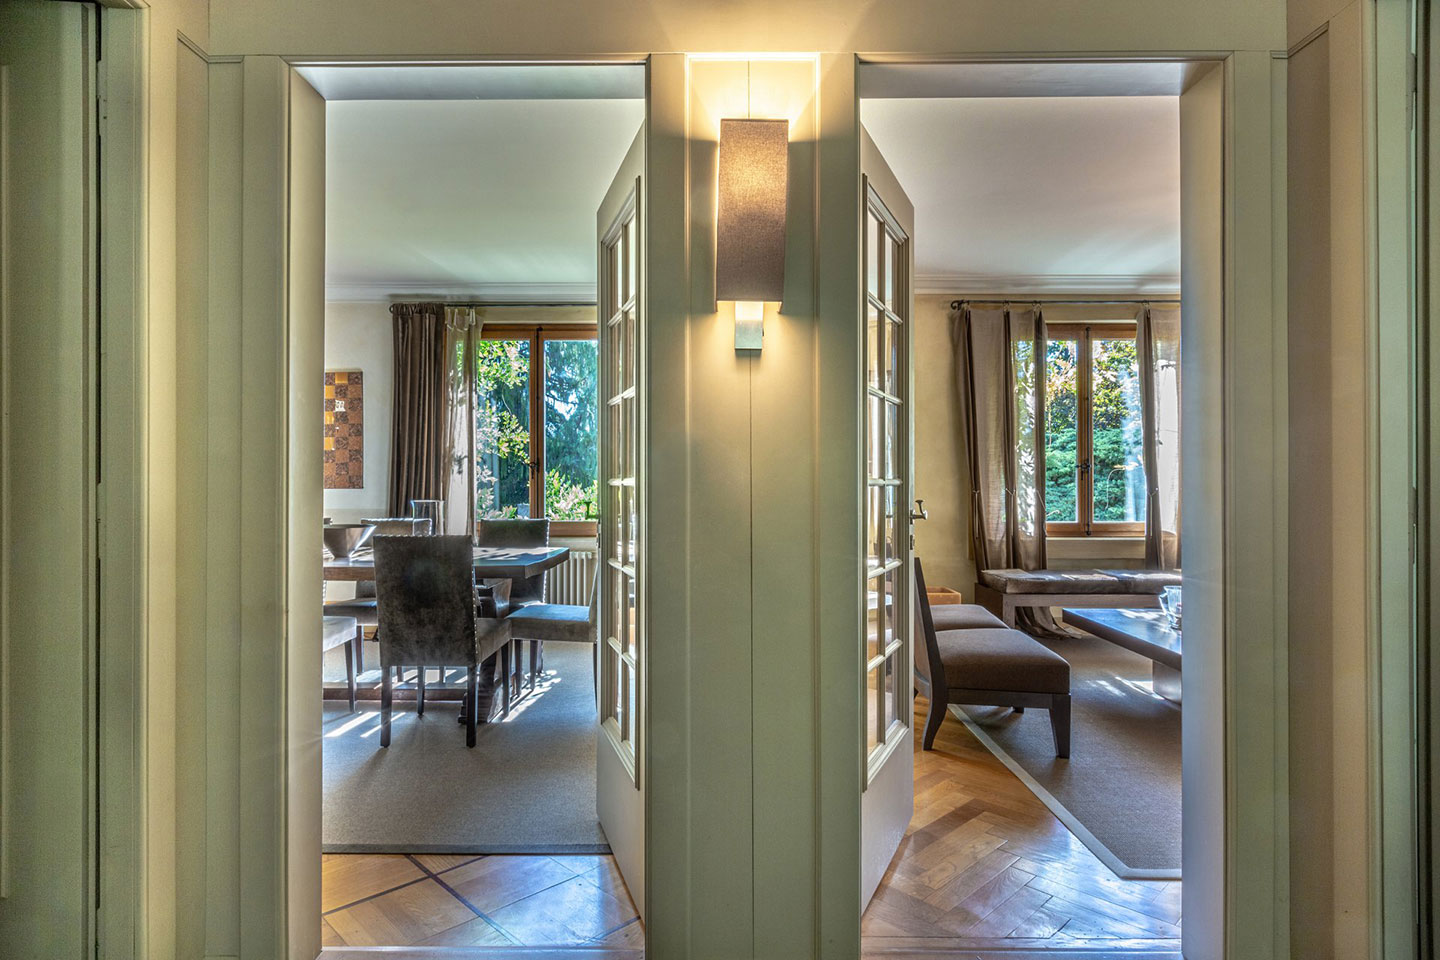 Splendid Property For Sale in Geneva Left Bank, Collonge-Bellerive | Presented by Finest International | Finest Residences